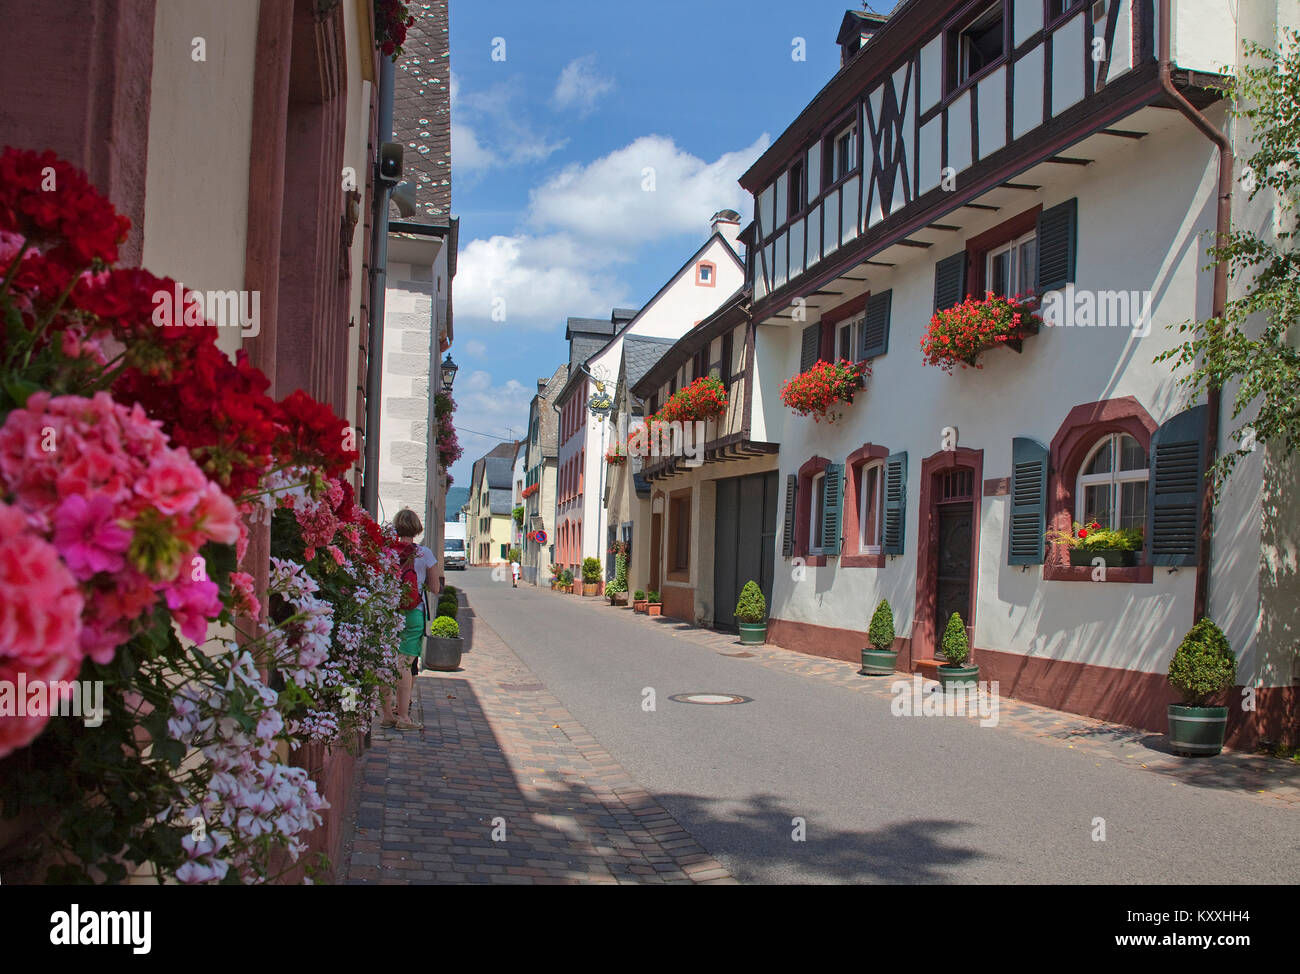 Strada romana con tipiche case , Neumagen, Neumagen-Dhron, vino più vecchio villaggio di Germania, Mosella, Renania-Palatinato, Germania, Europa Foto Stock